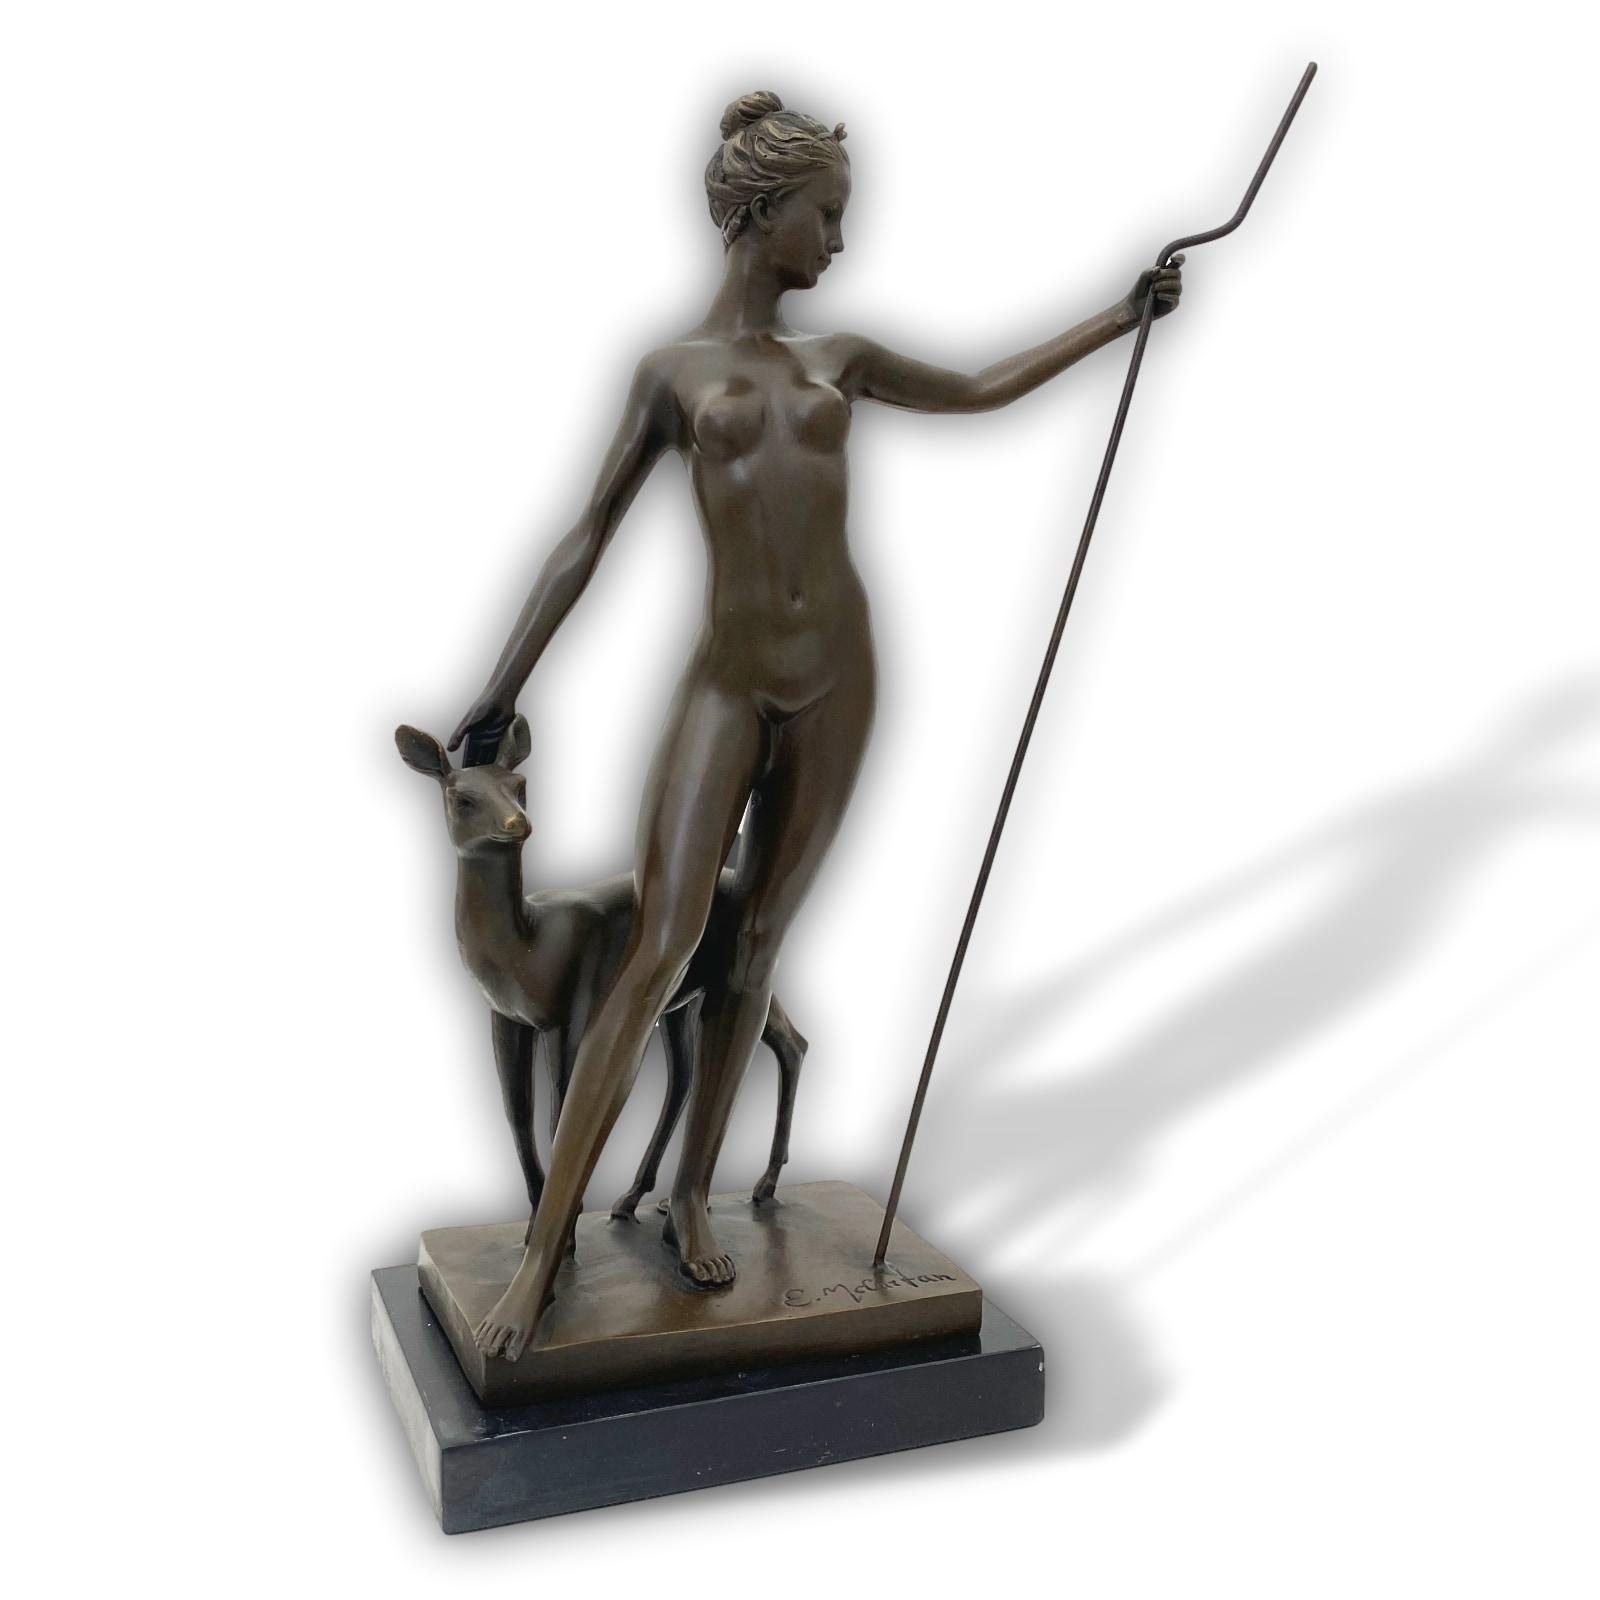 Aubaho Skulptur Bronzefigur Diana Göttin McCartan Skulptur Antik-S nach derJagd Bronze